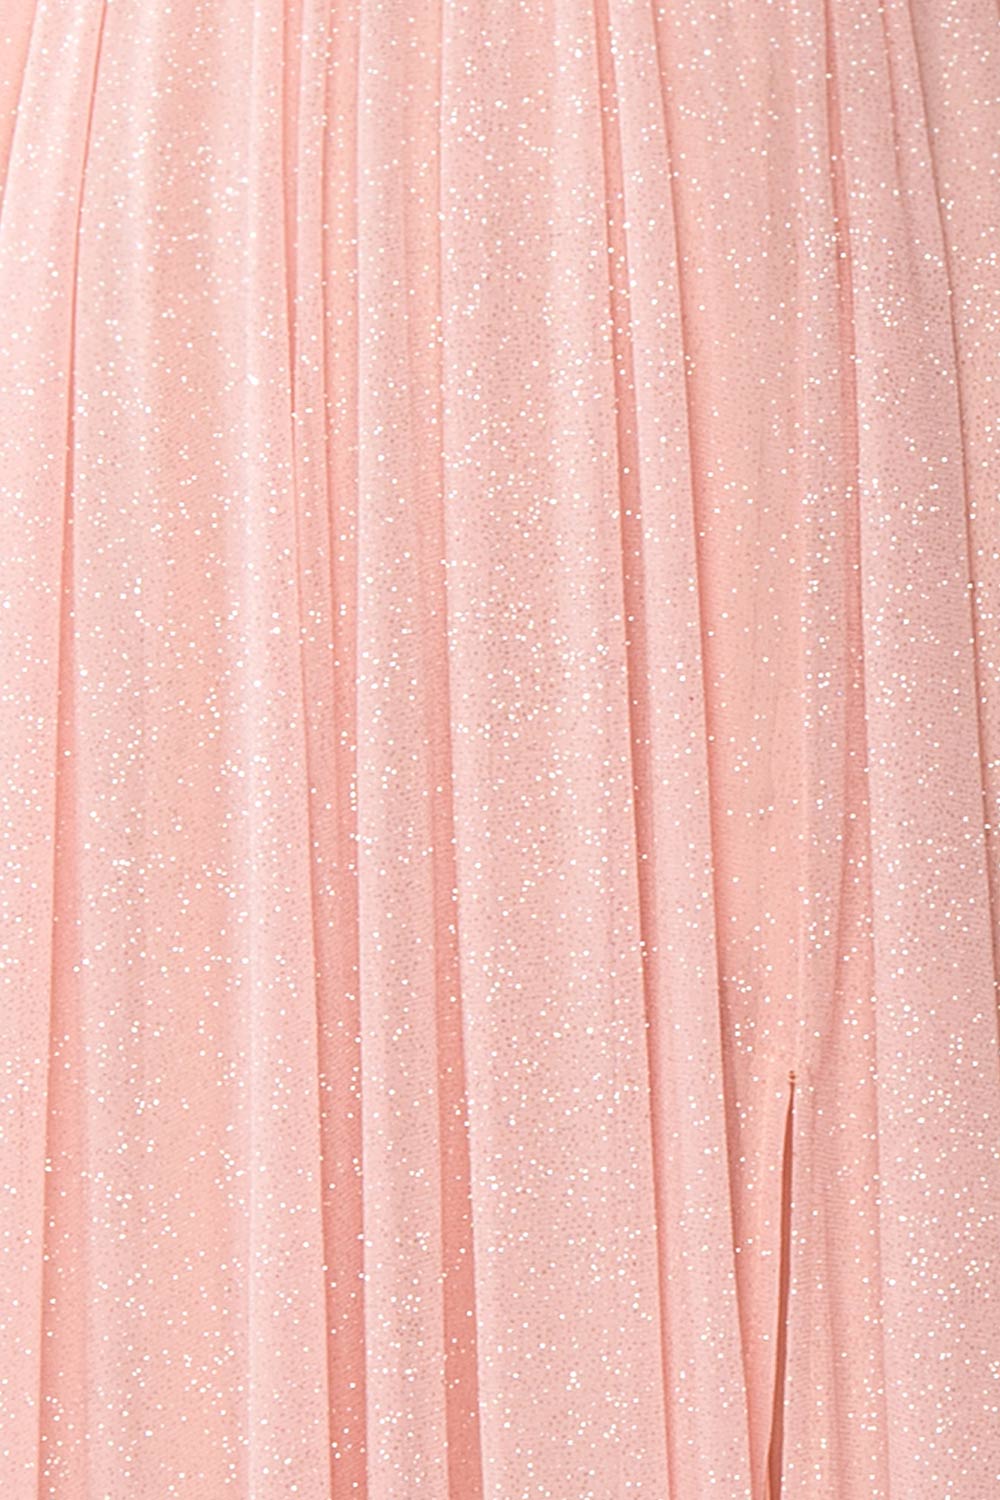 Cephee Blush Glitter Dress | Robe | Boutique 1861 fabric detail